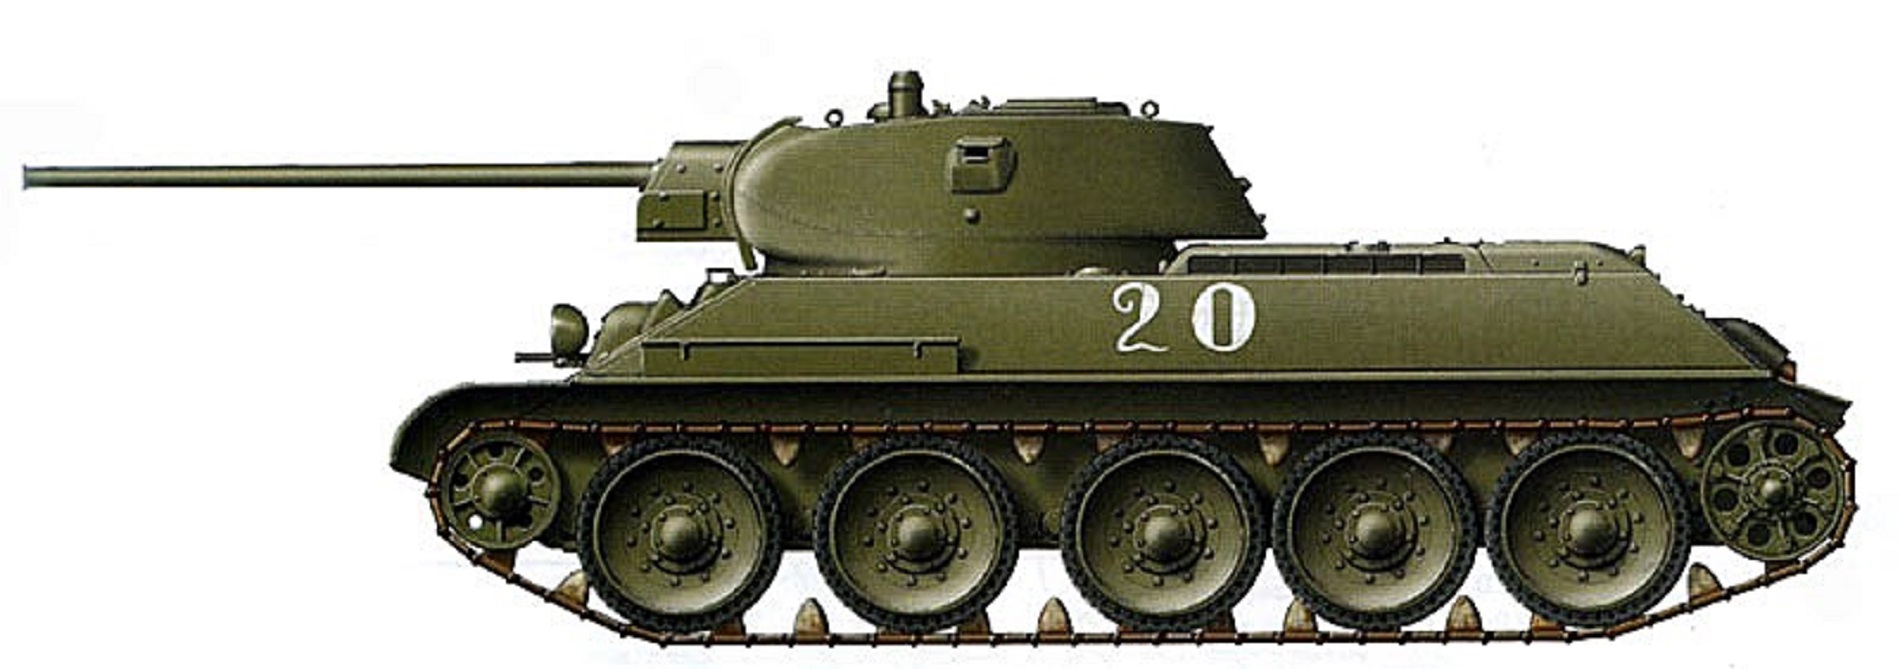 Ми з т. Танк т34 сбоку. Т 34 сбоку. Т-34 средний танк. Танк т 34 в профиль.